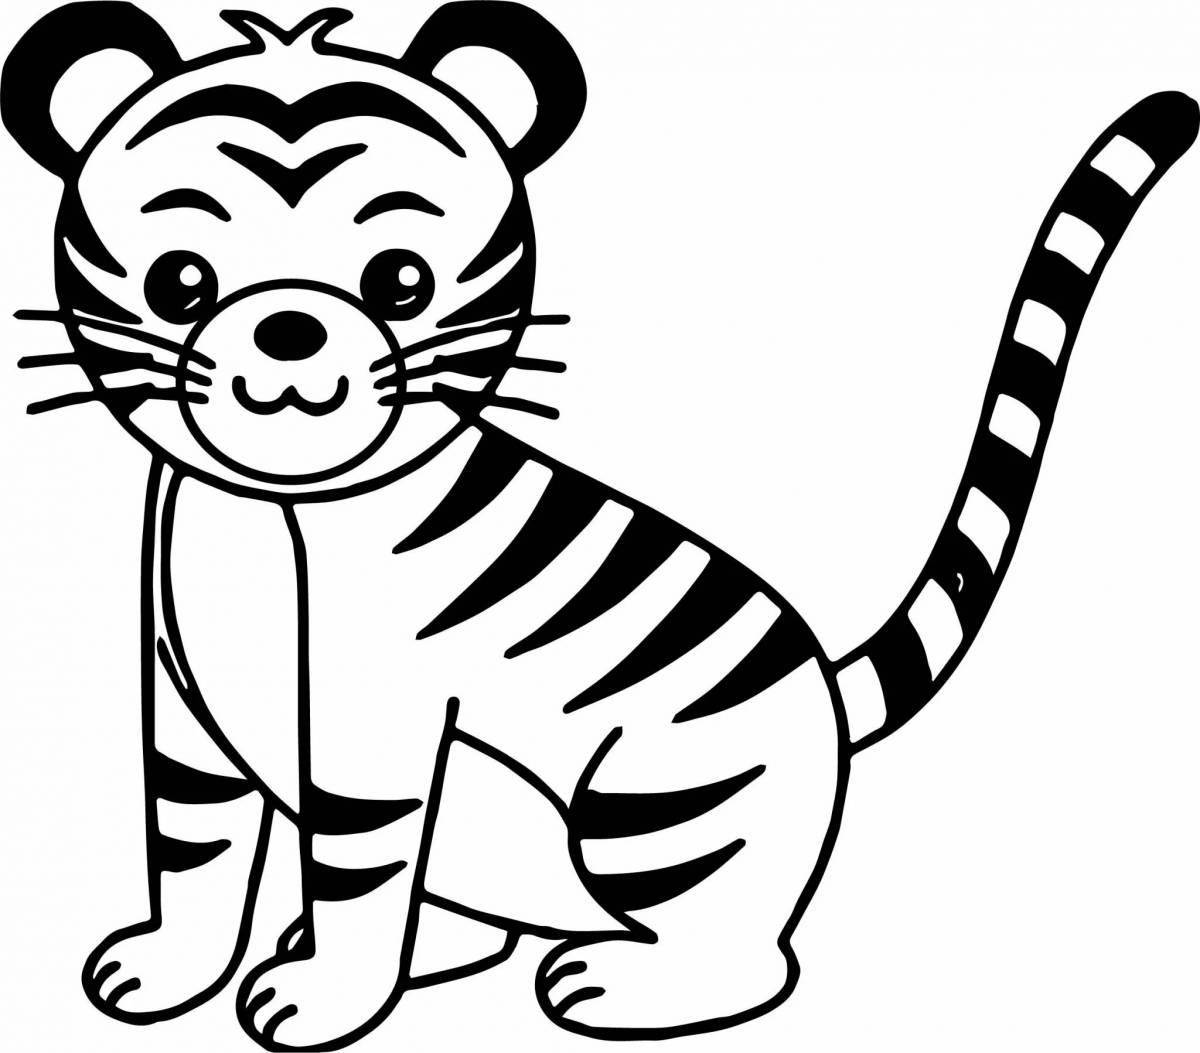 Буйный рисунок тигра